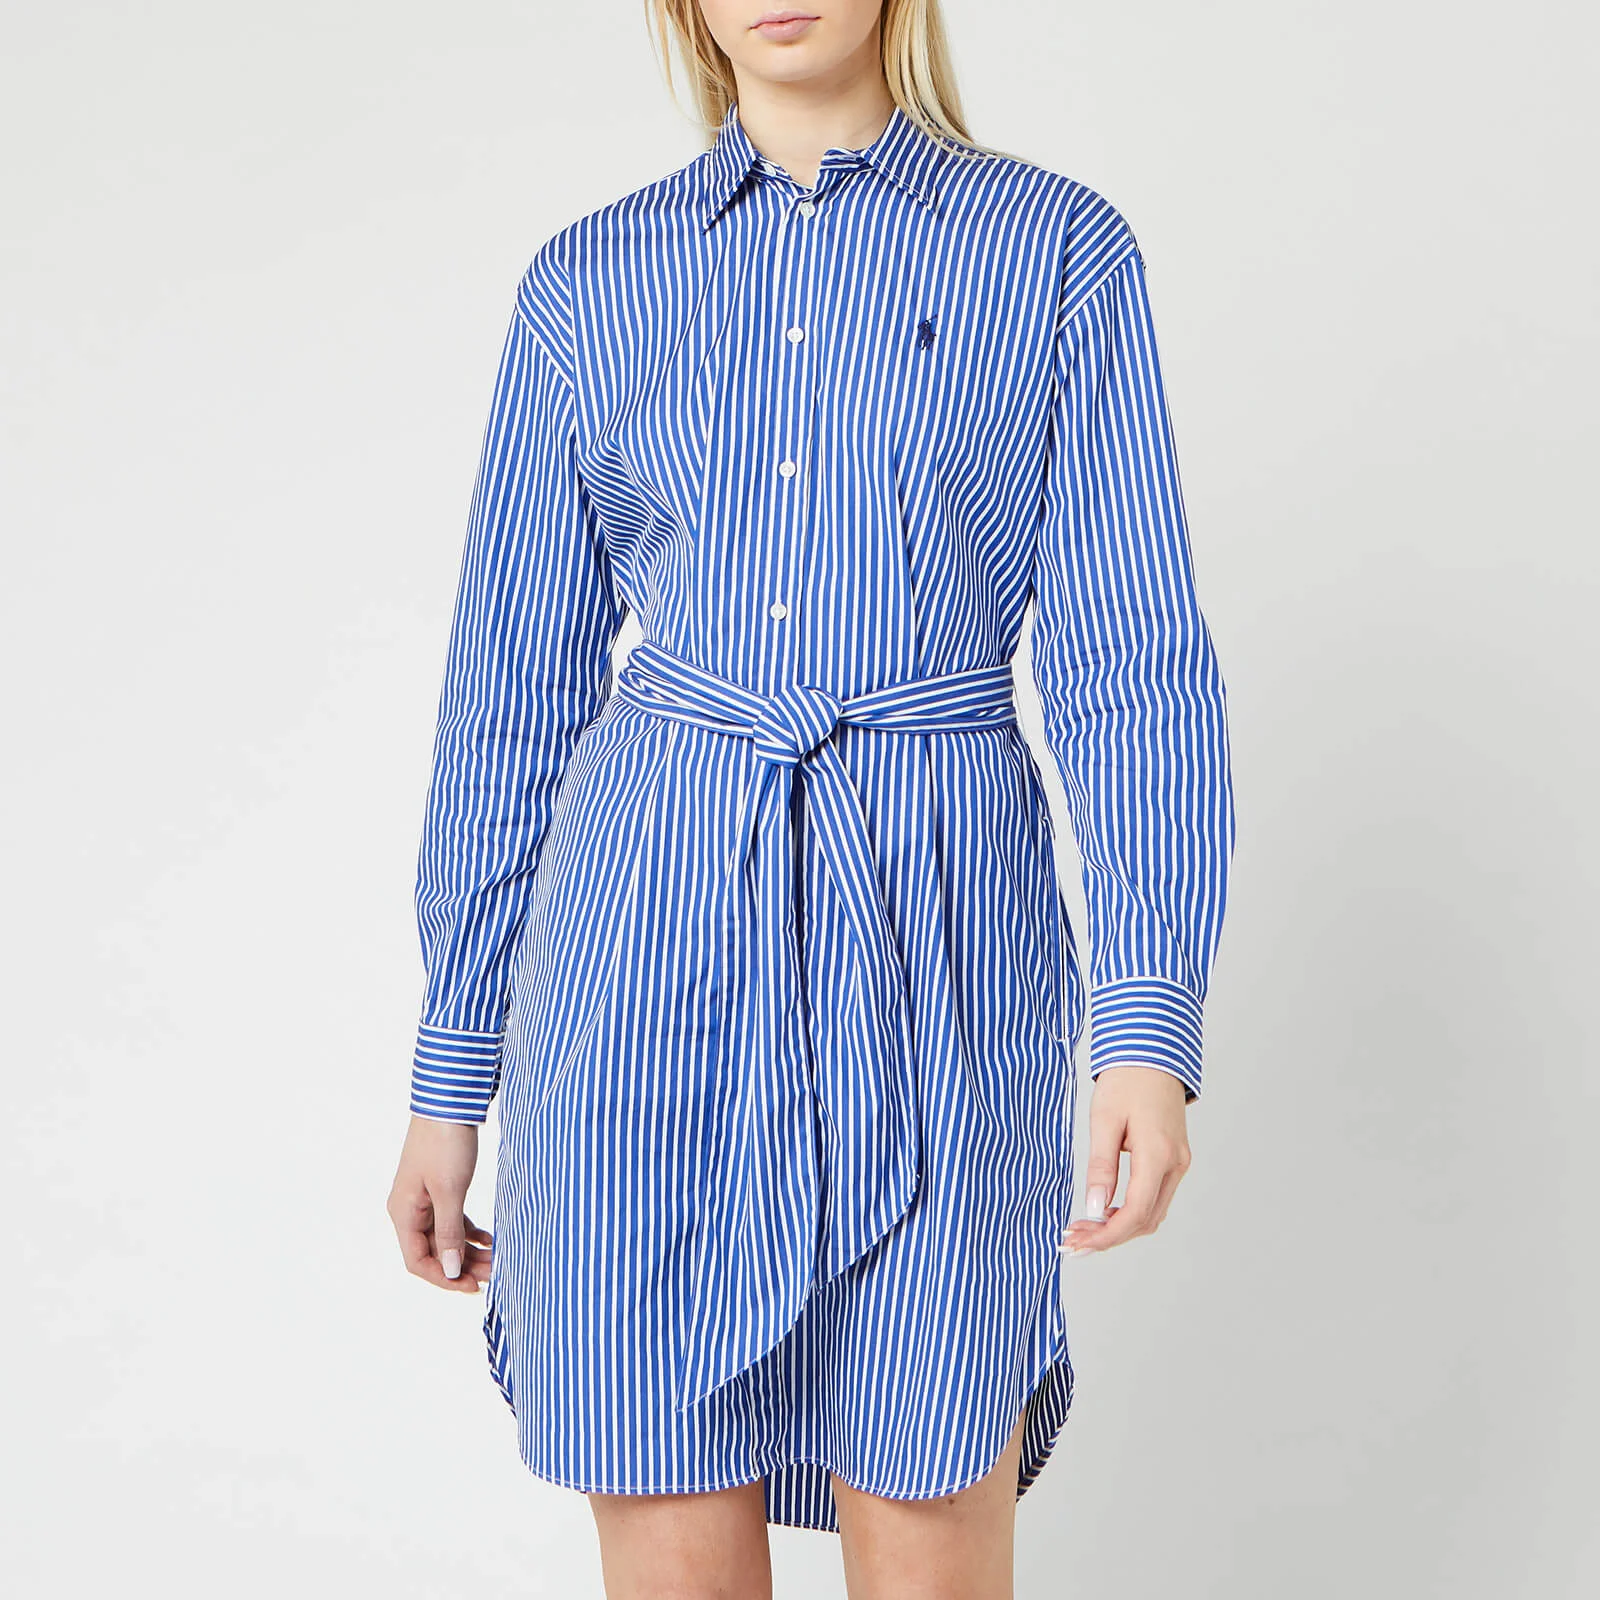 Polo Ralph Lauren Women's Long Sleeve Stripe Shirt Dress - Blue/White Image 1